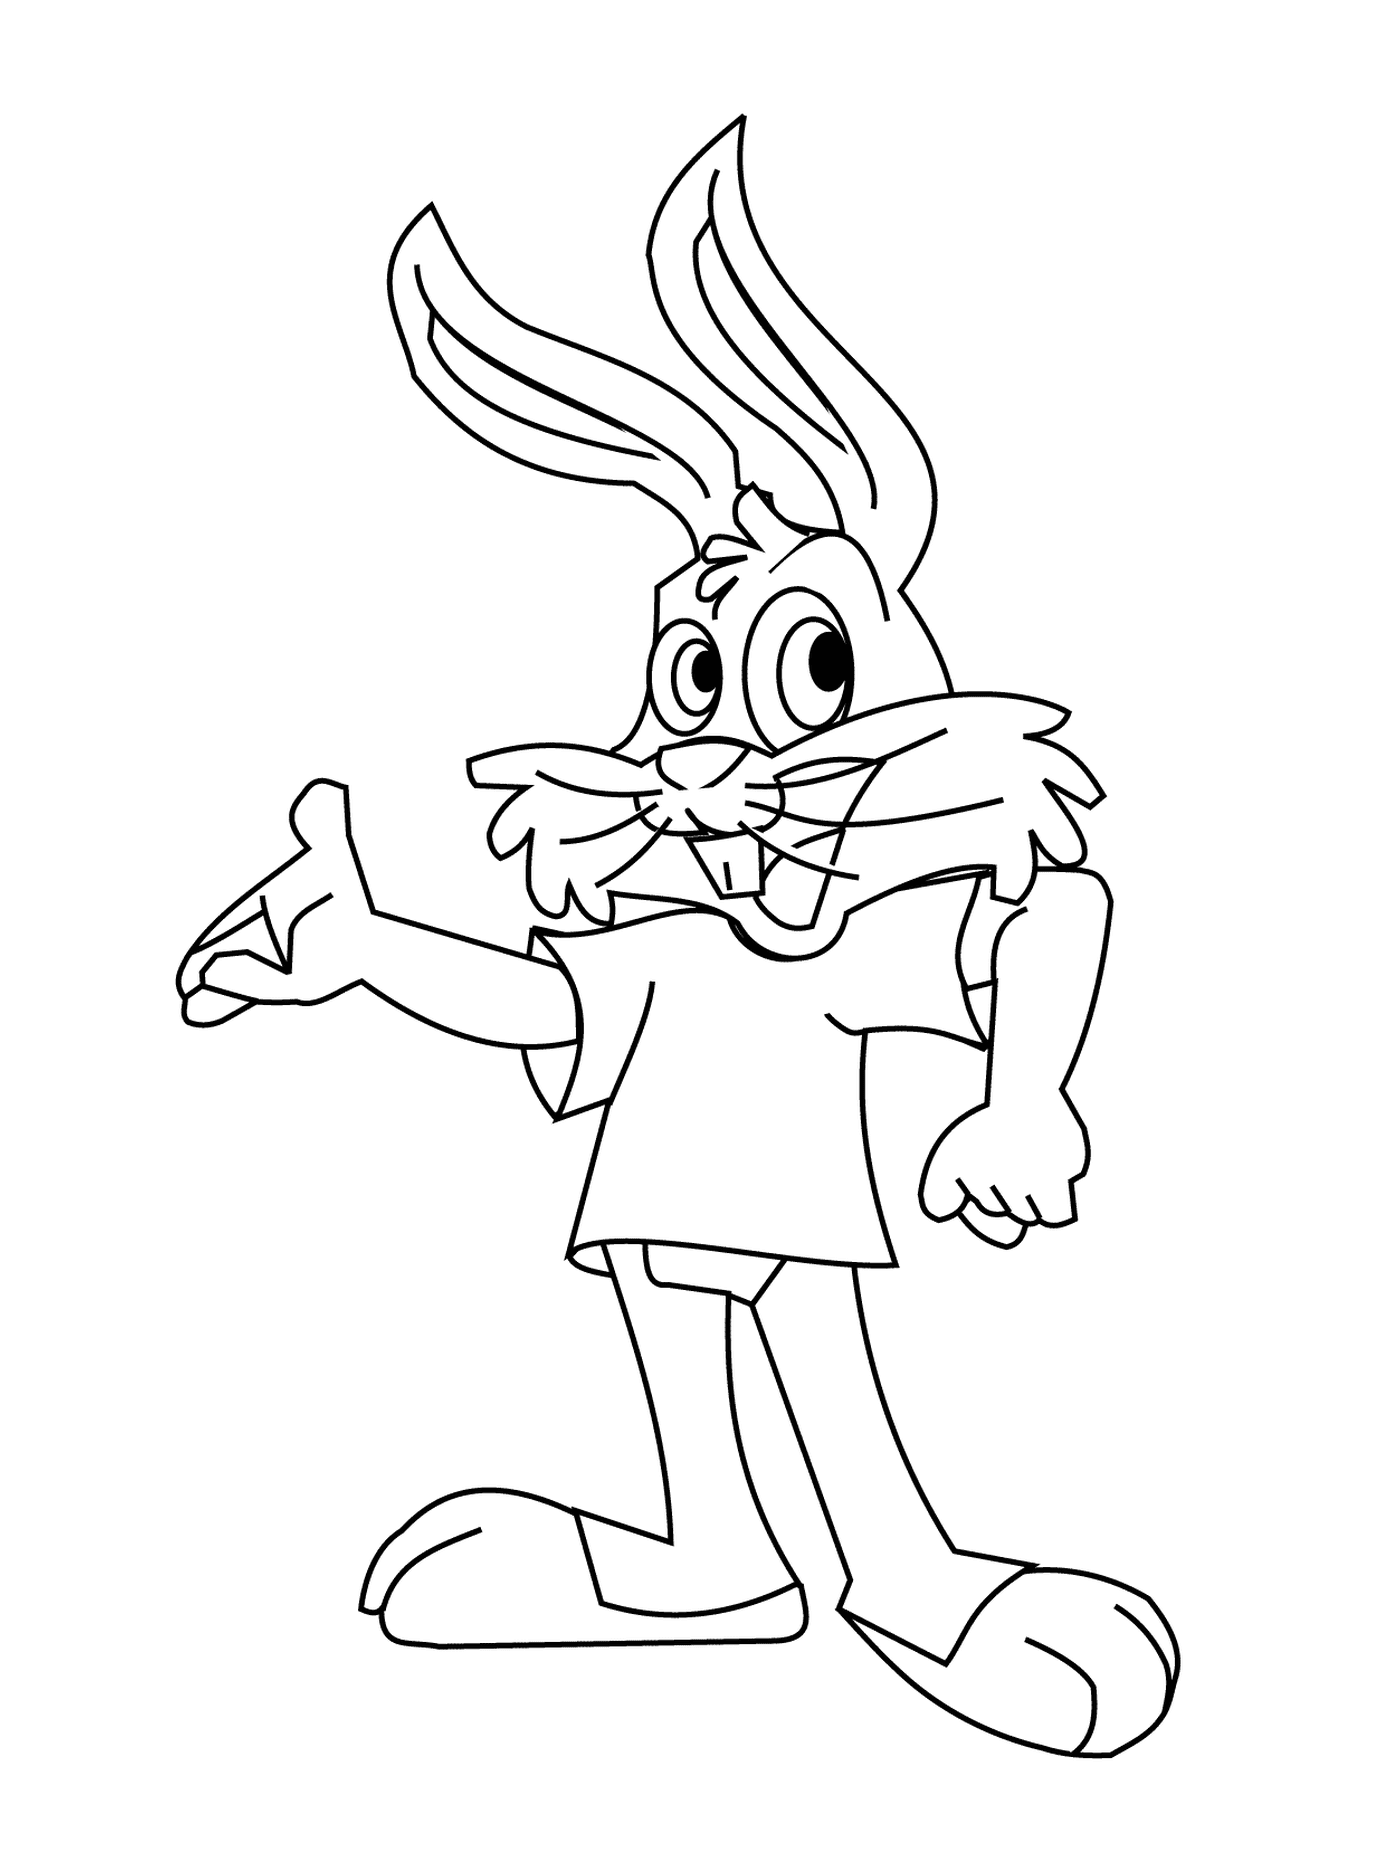  Conejo enseñando como Bugs Bunny 